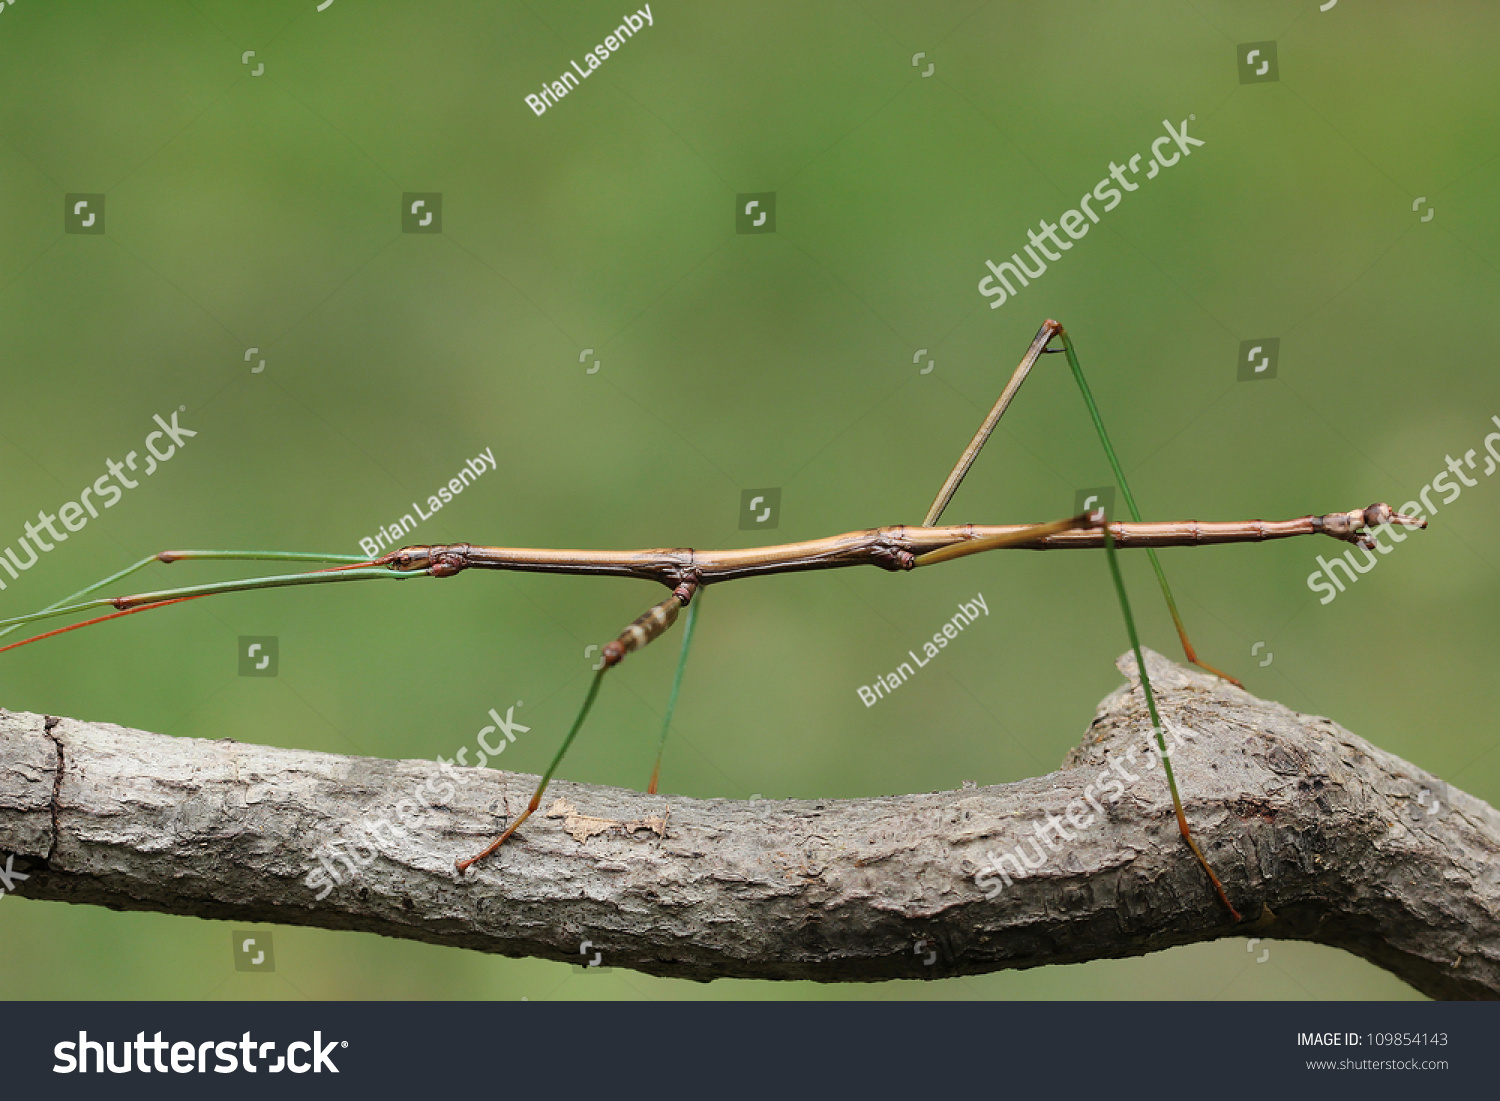 Northern Walking Stick (Diapheromera femorata) Perched on a Tree Branch - Ontario, Canada #109854143